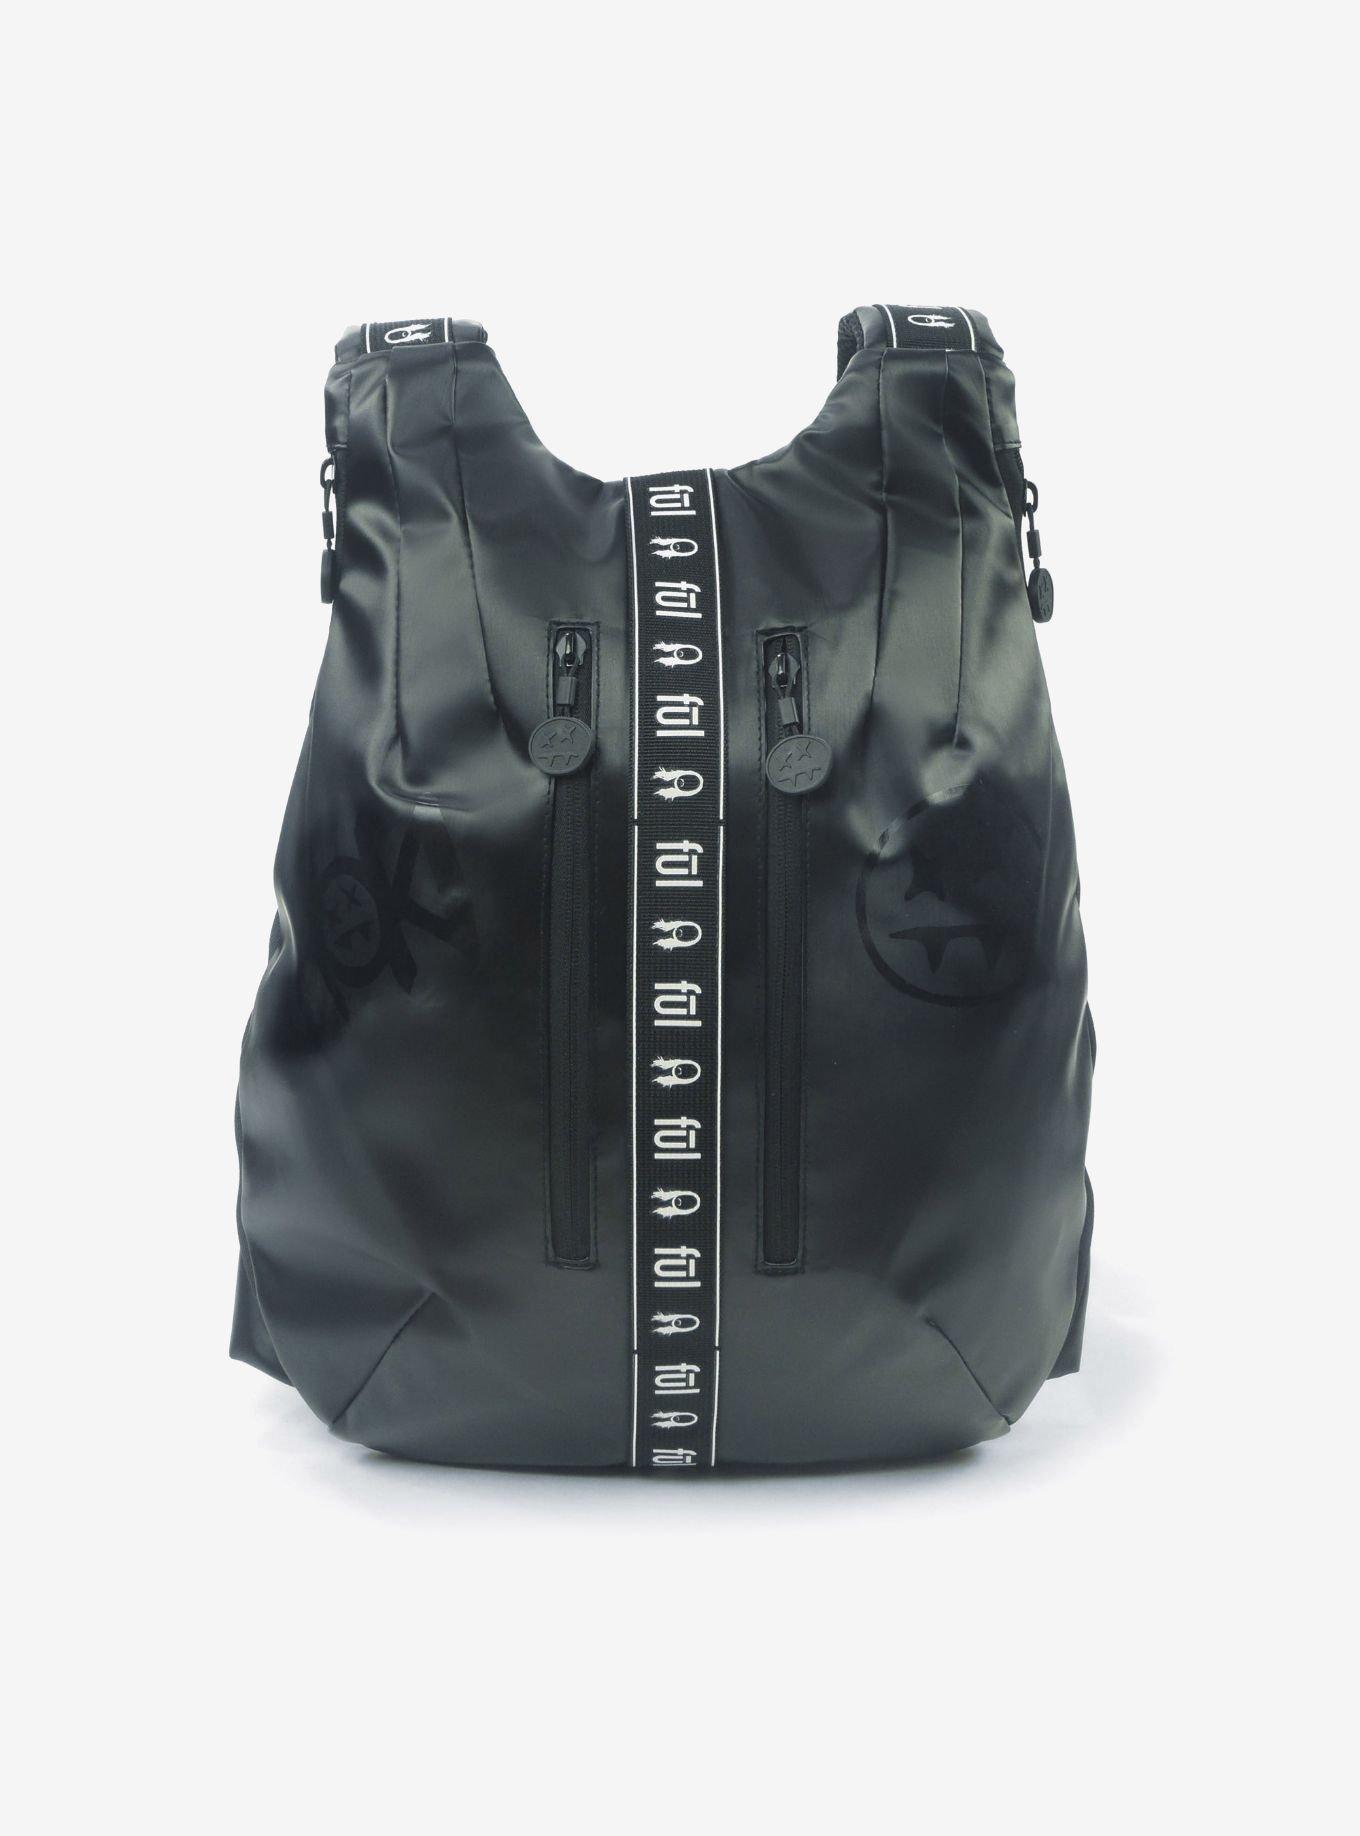 Steve Aoki FUL FANG Slouchy Backpack, , hi-res